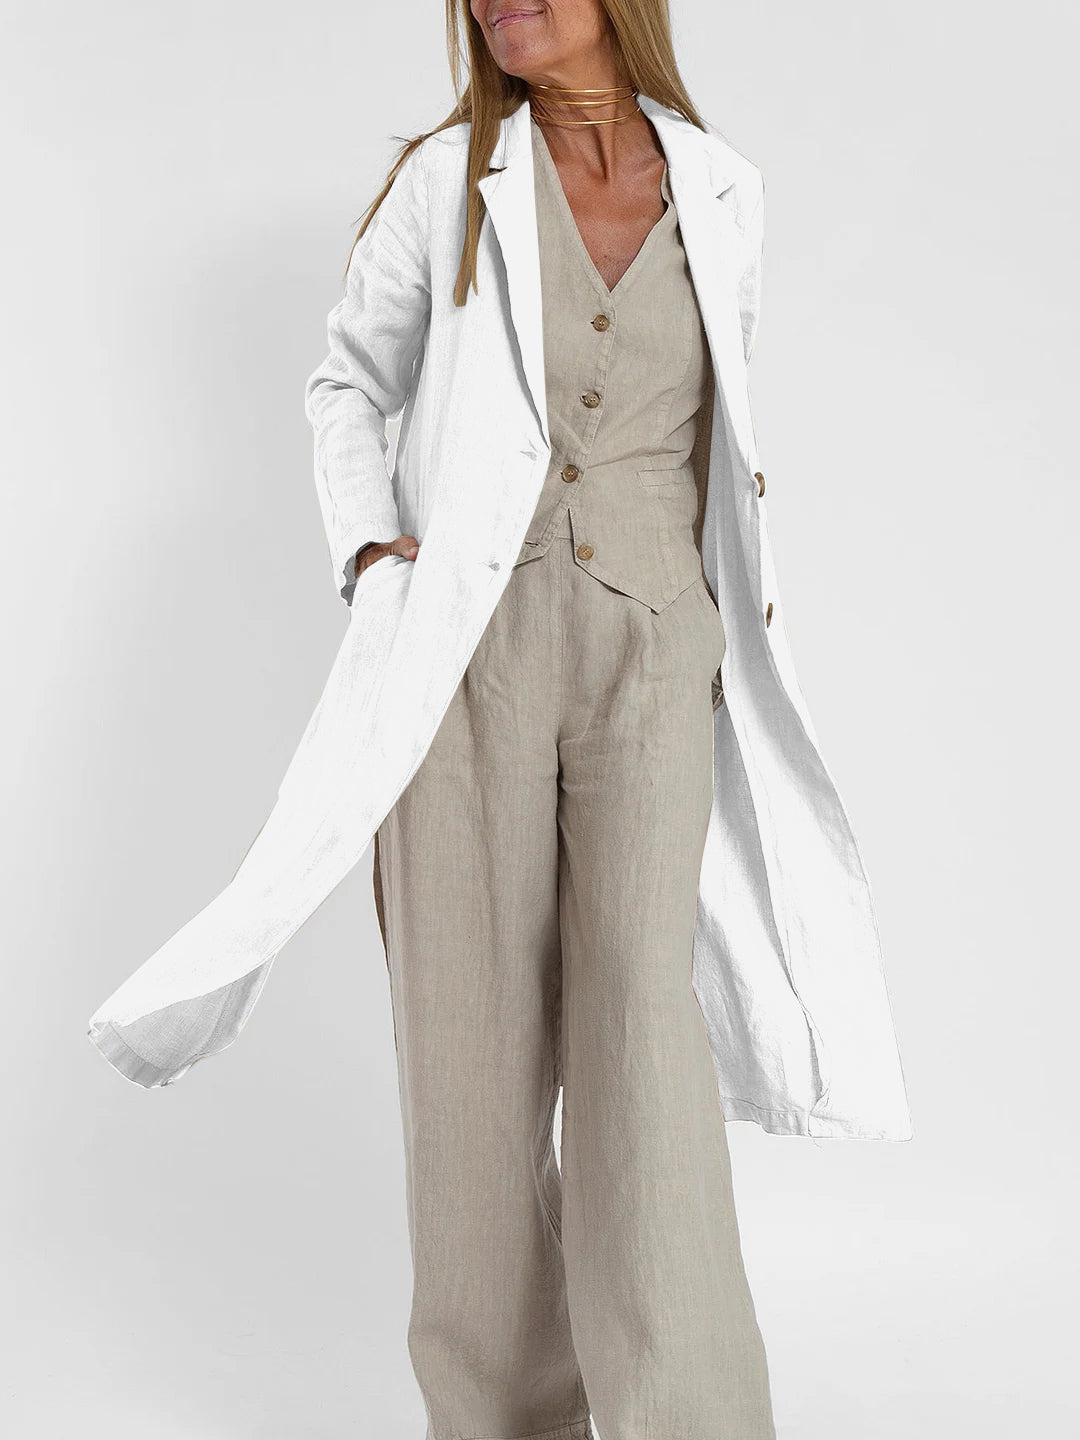 NTG Fad Blazers & Jackets White / S Cotton Linen Suit Collar Pocket Jacket